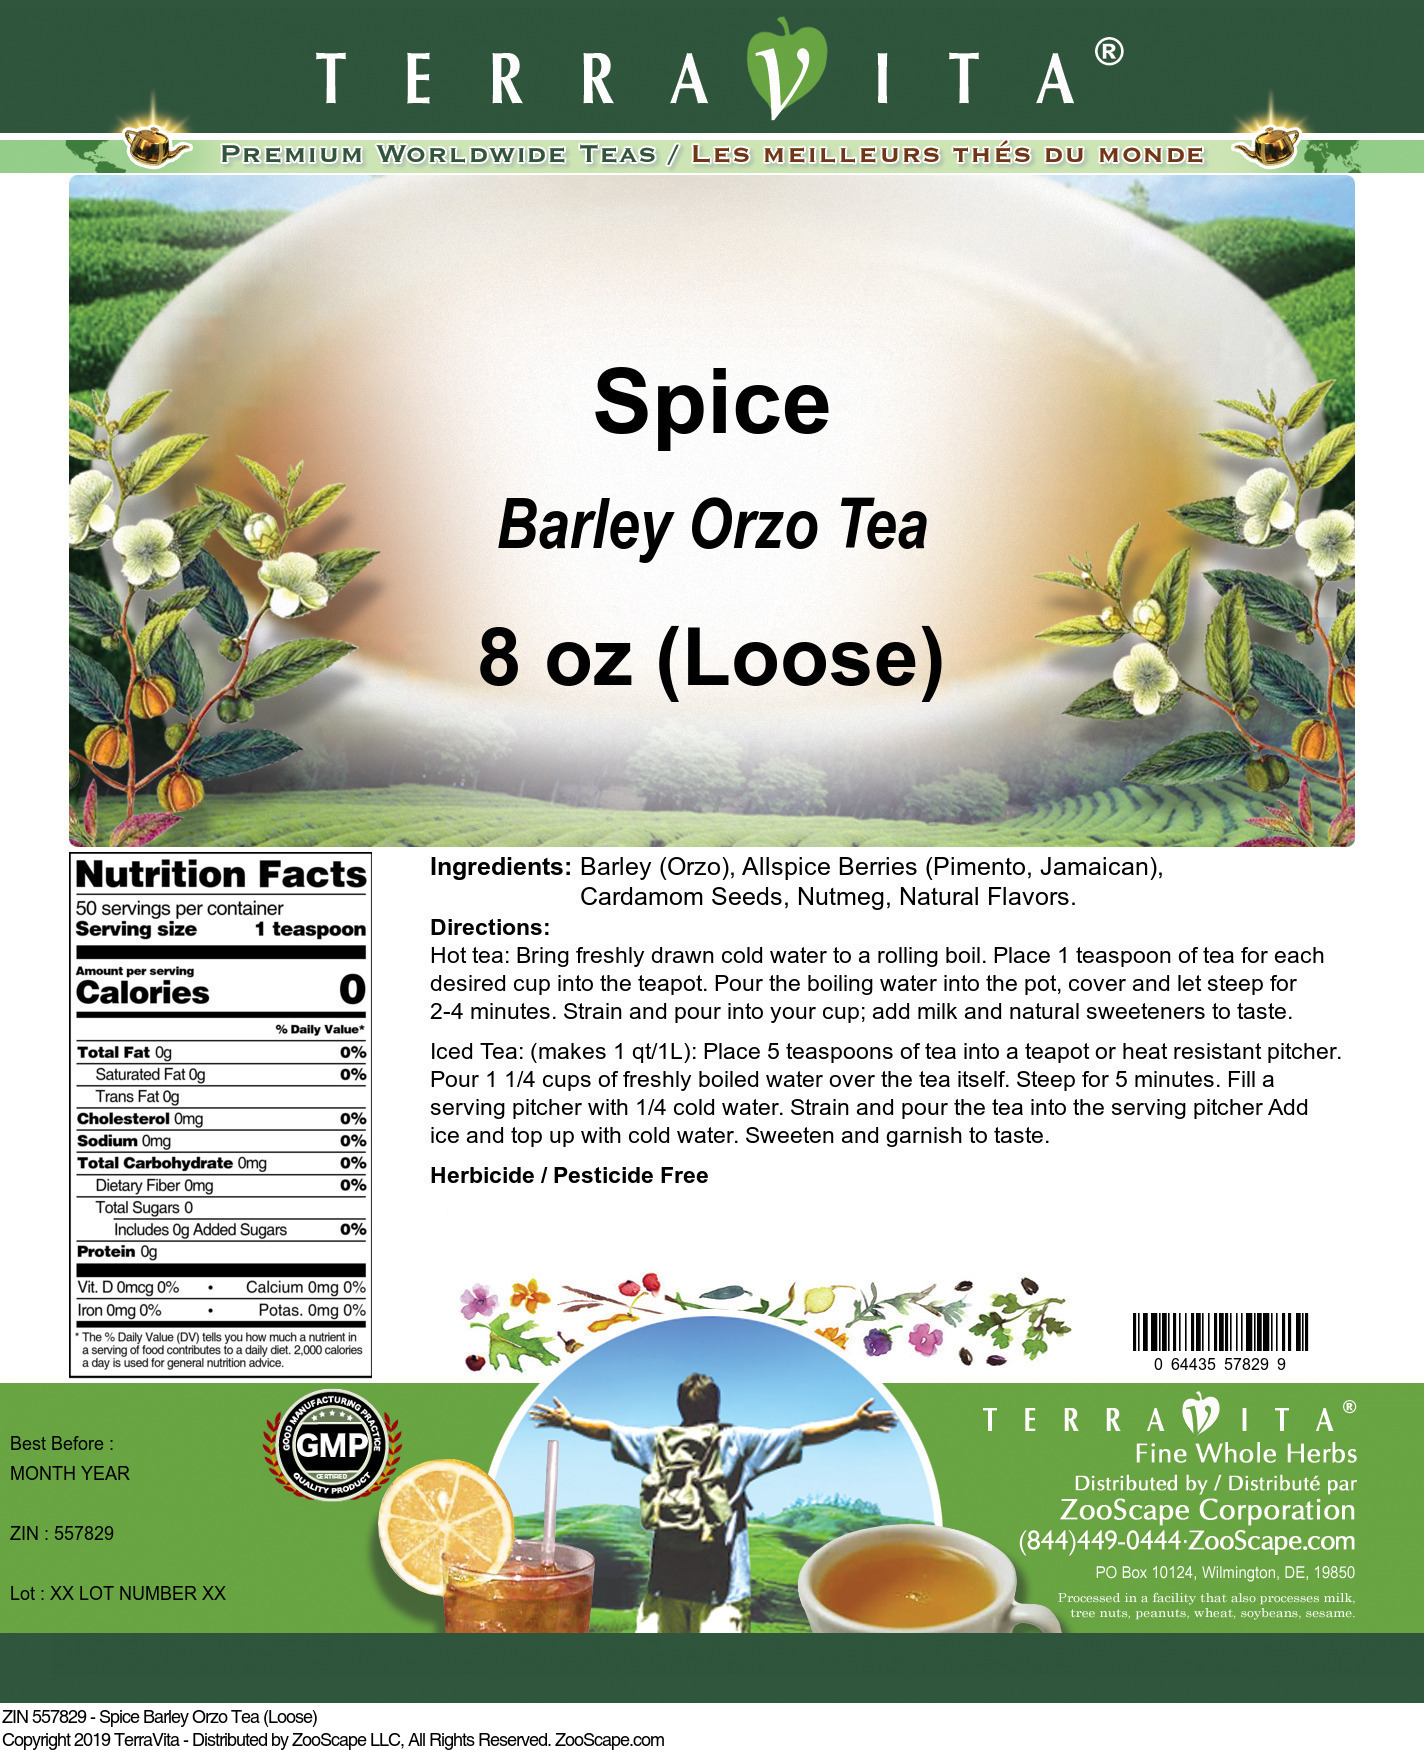 Spice Barley Orzo Tea (Loose) - Label